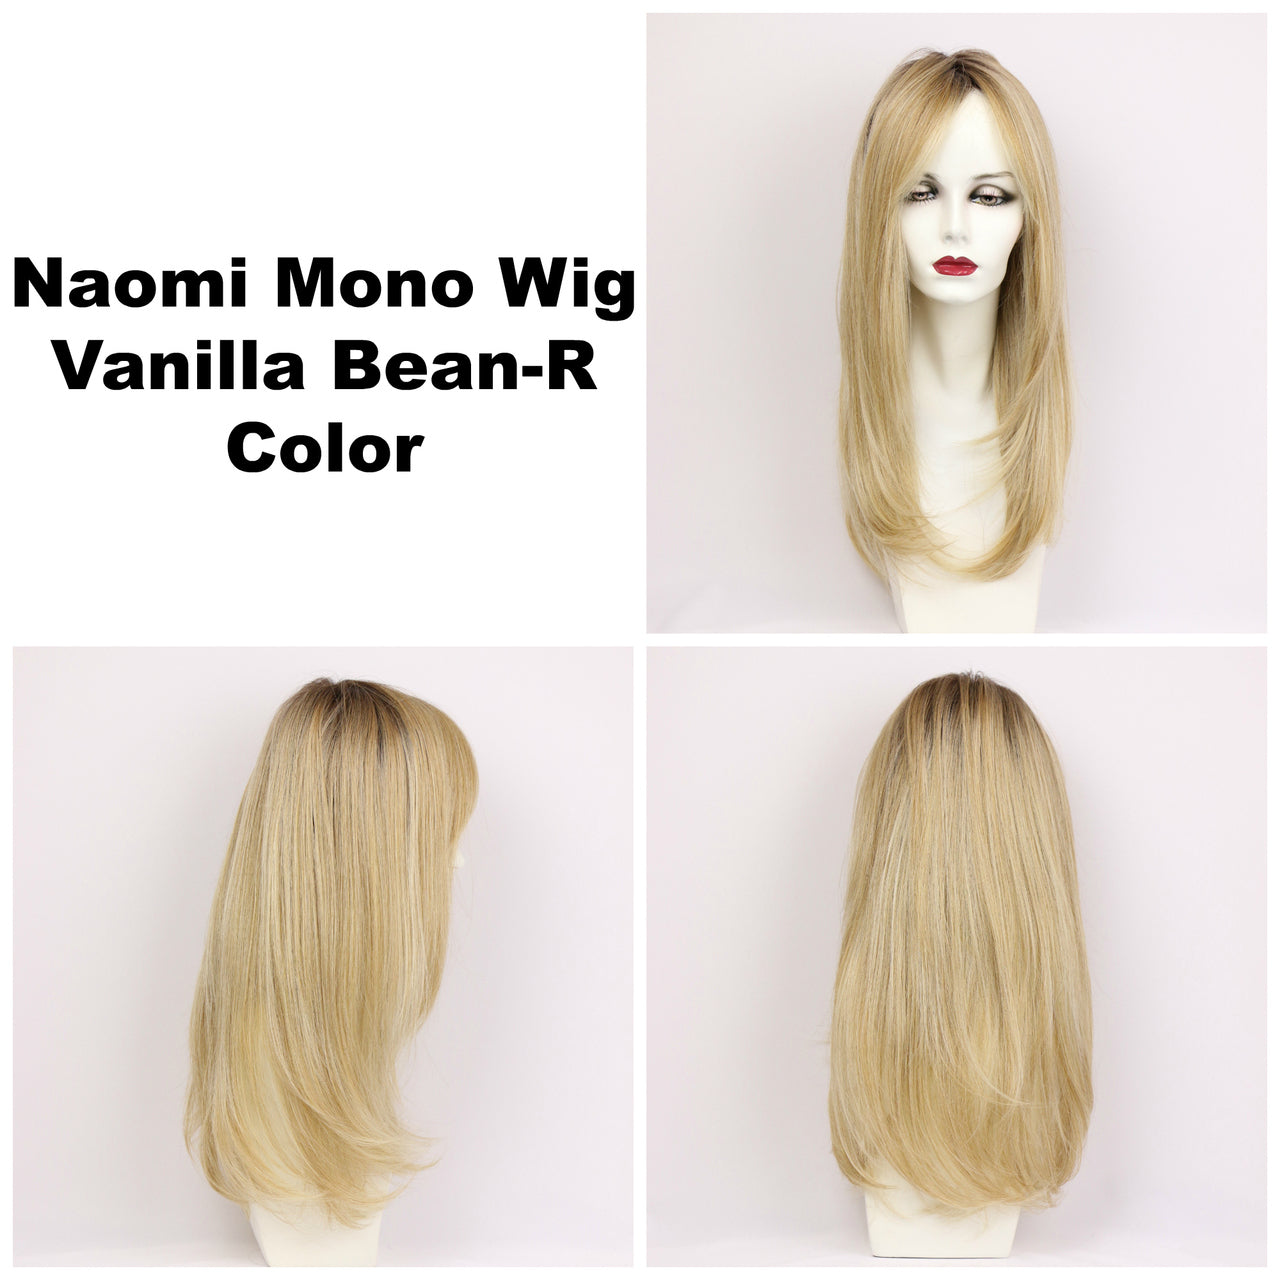 Vanilla Bean-R / Naomi Monofilament w/ Roots / Long Wig